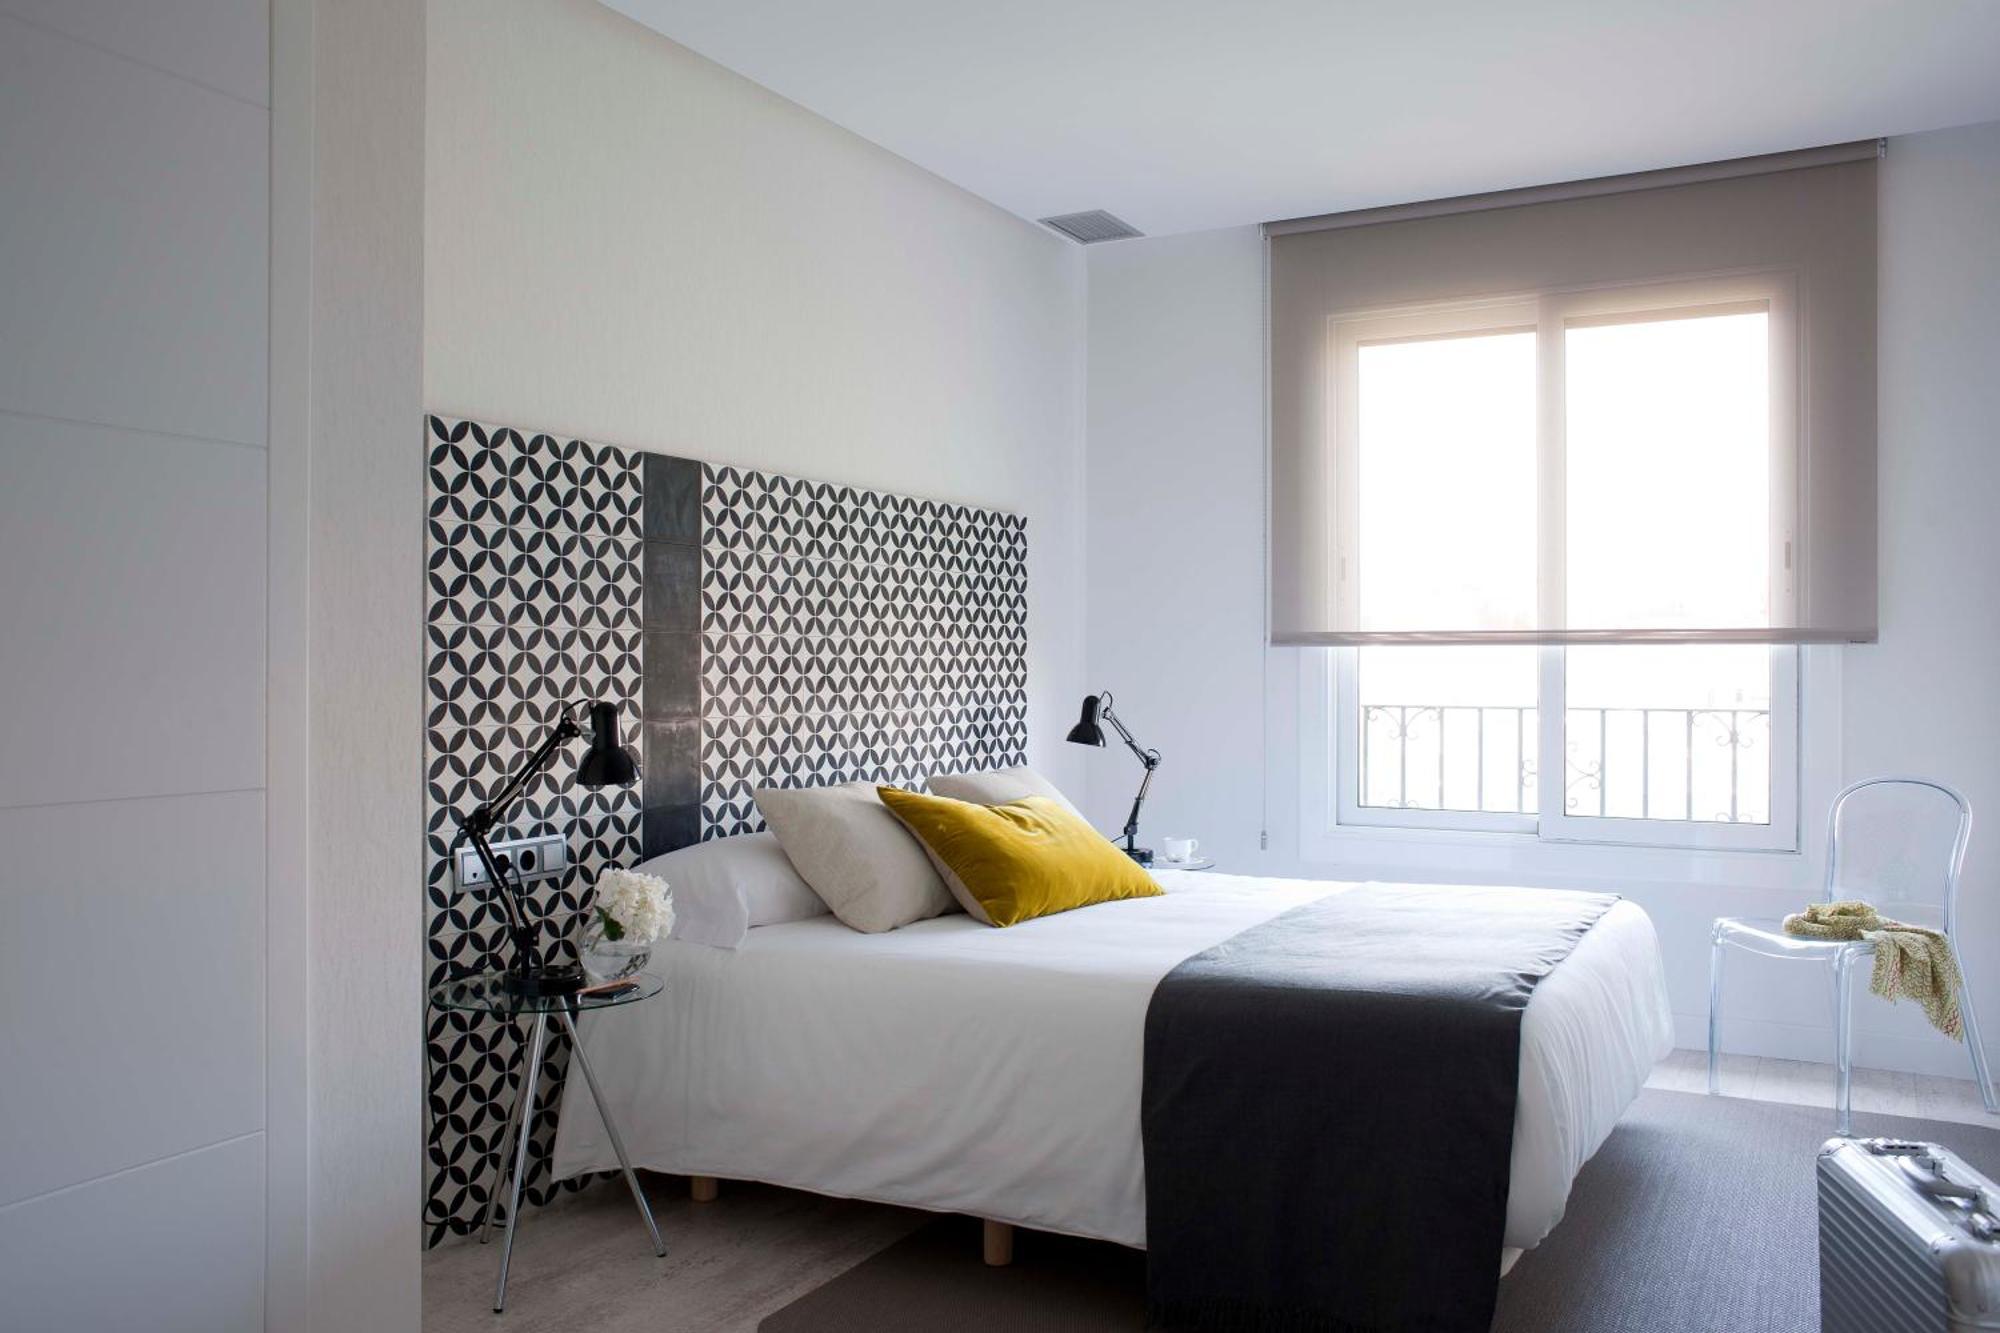 Eric Vokel Boutique Apartments - Atocha Suites Madrid Esterno foto